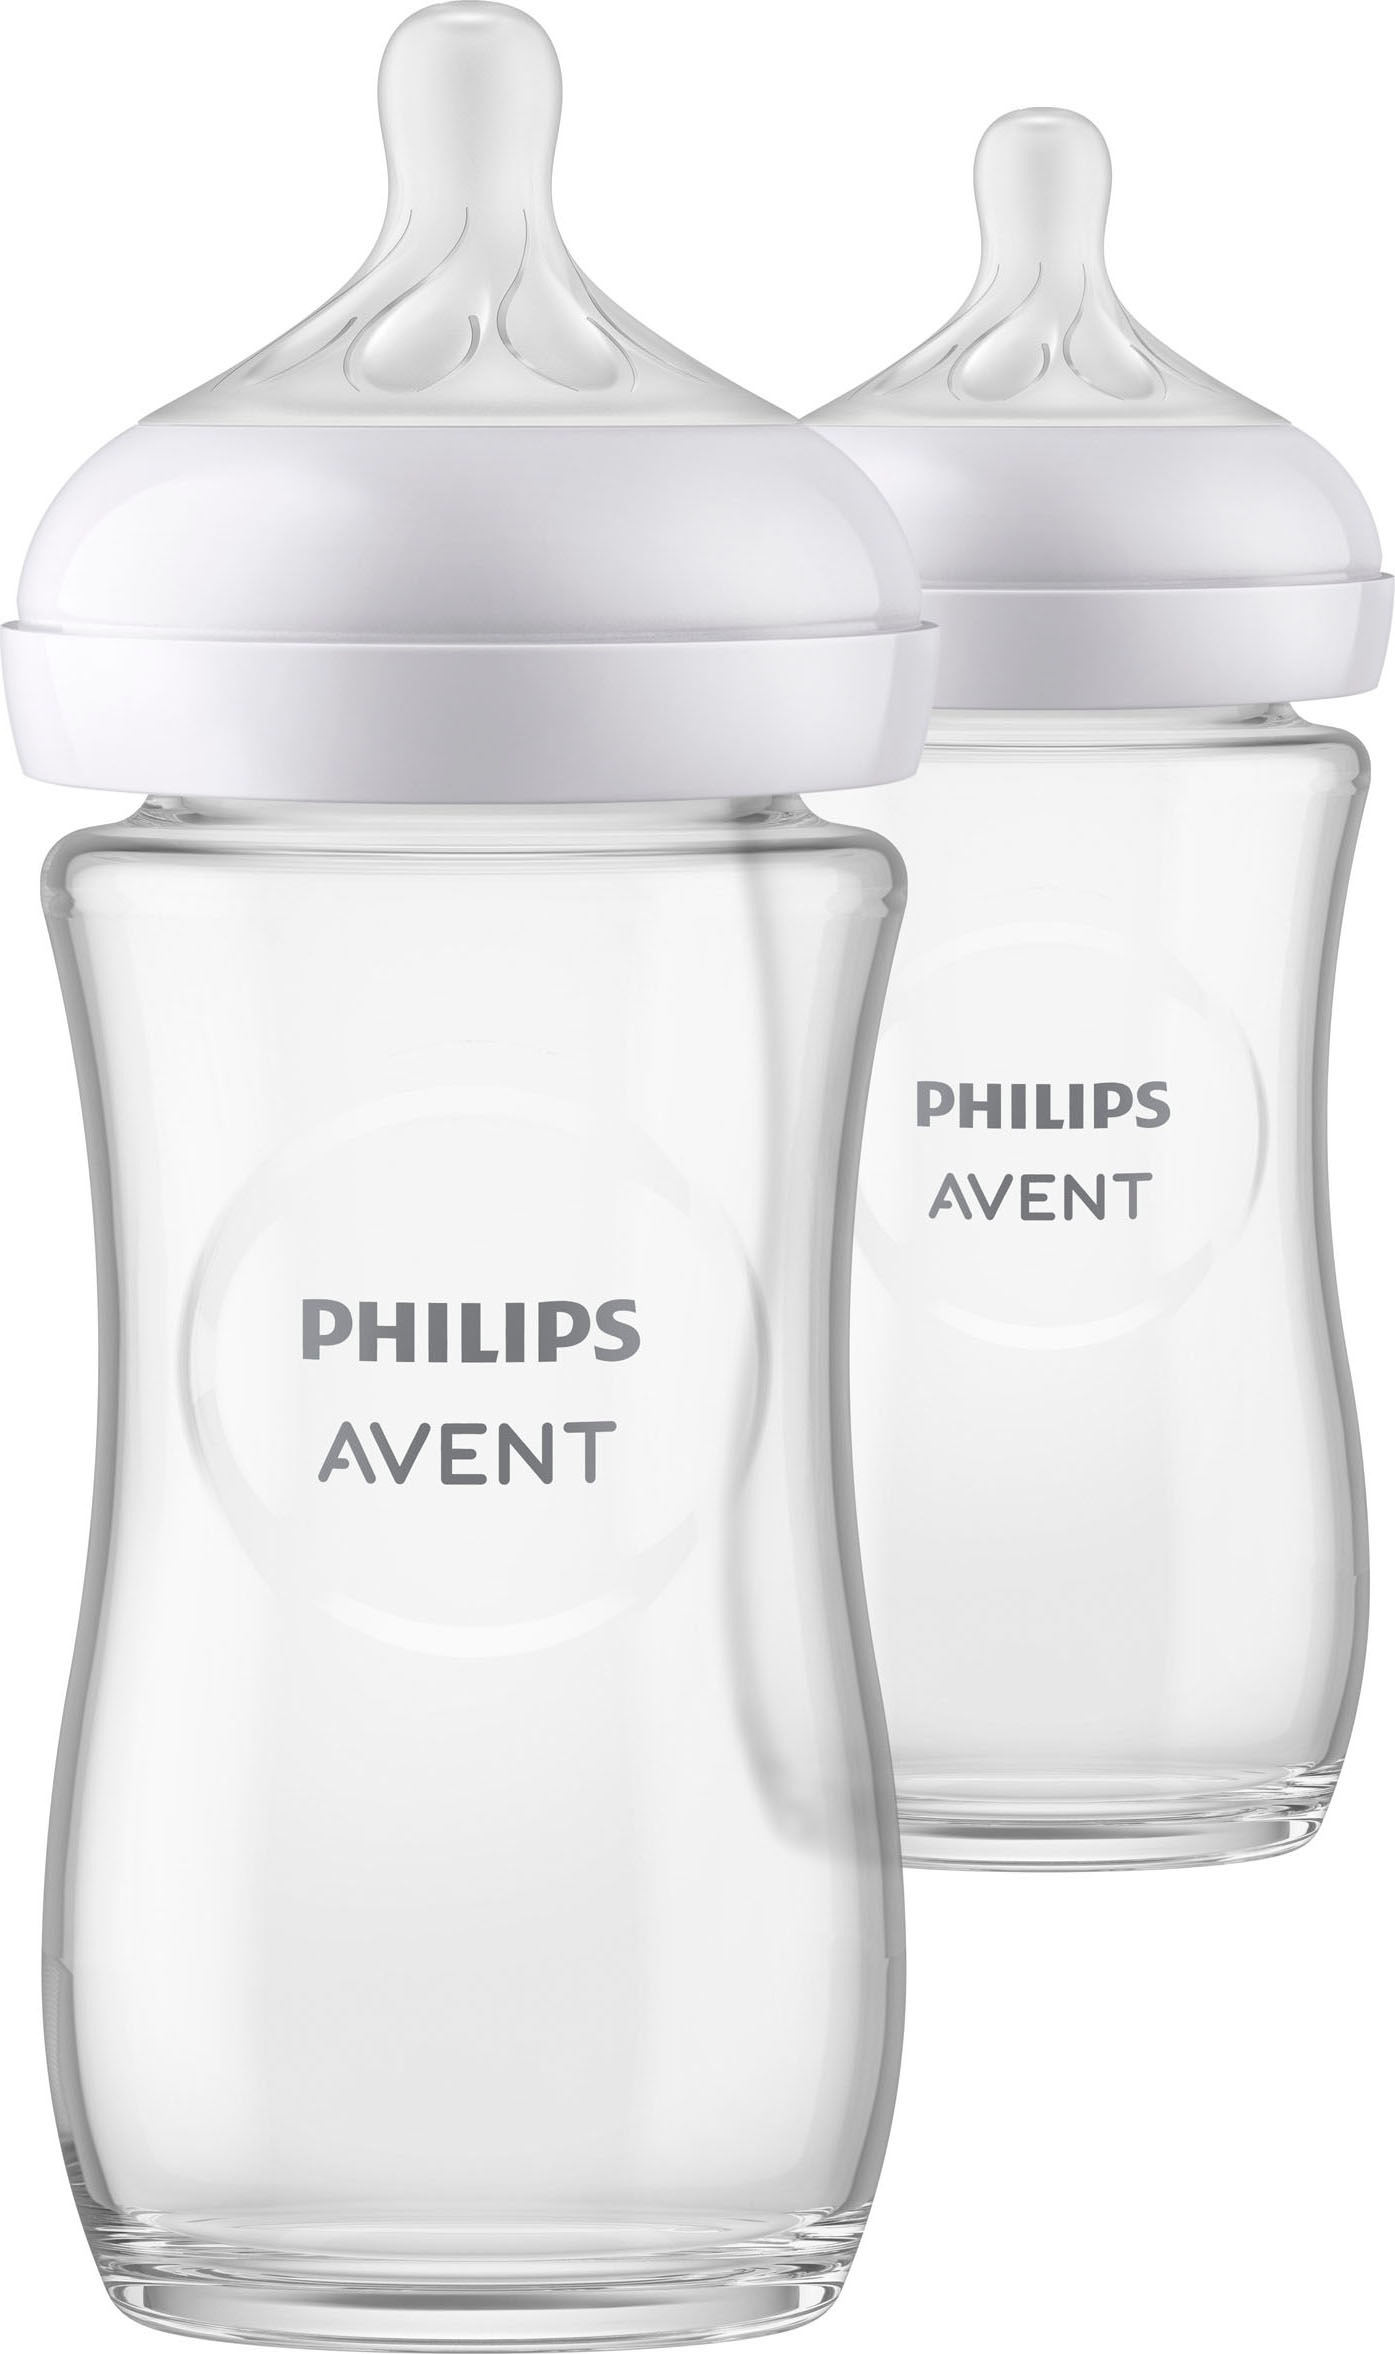 Philips AVENT Babyflasche »Natural Response SCY933/02«, 2 Stück, 240ml, Glas, ab dem 1. Monat